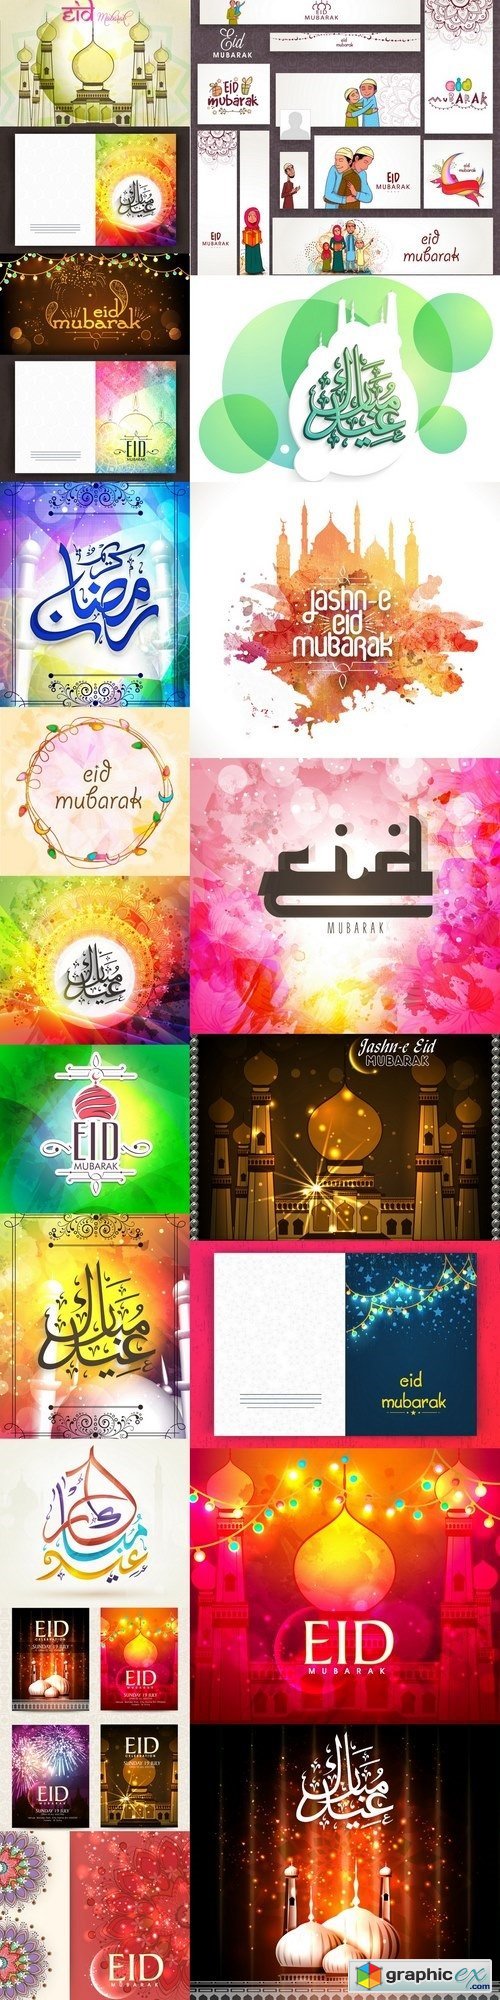 Social media post and header set for Eid Mubarak 5